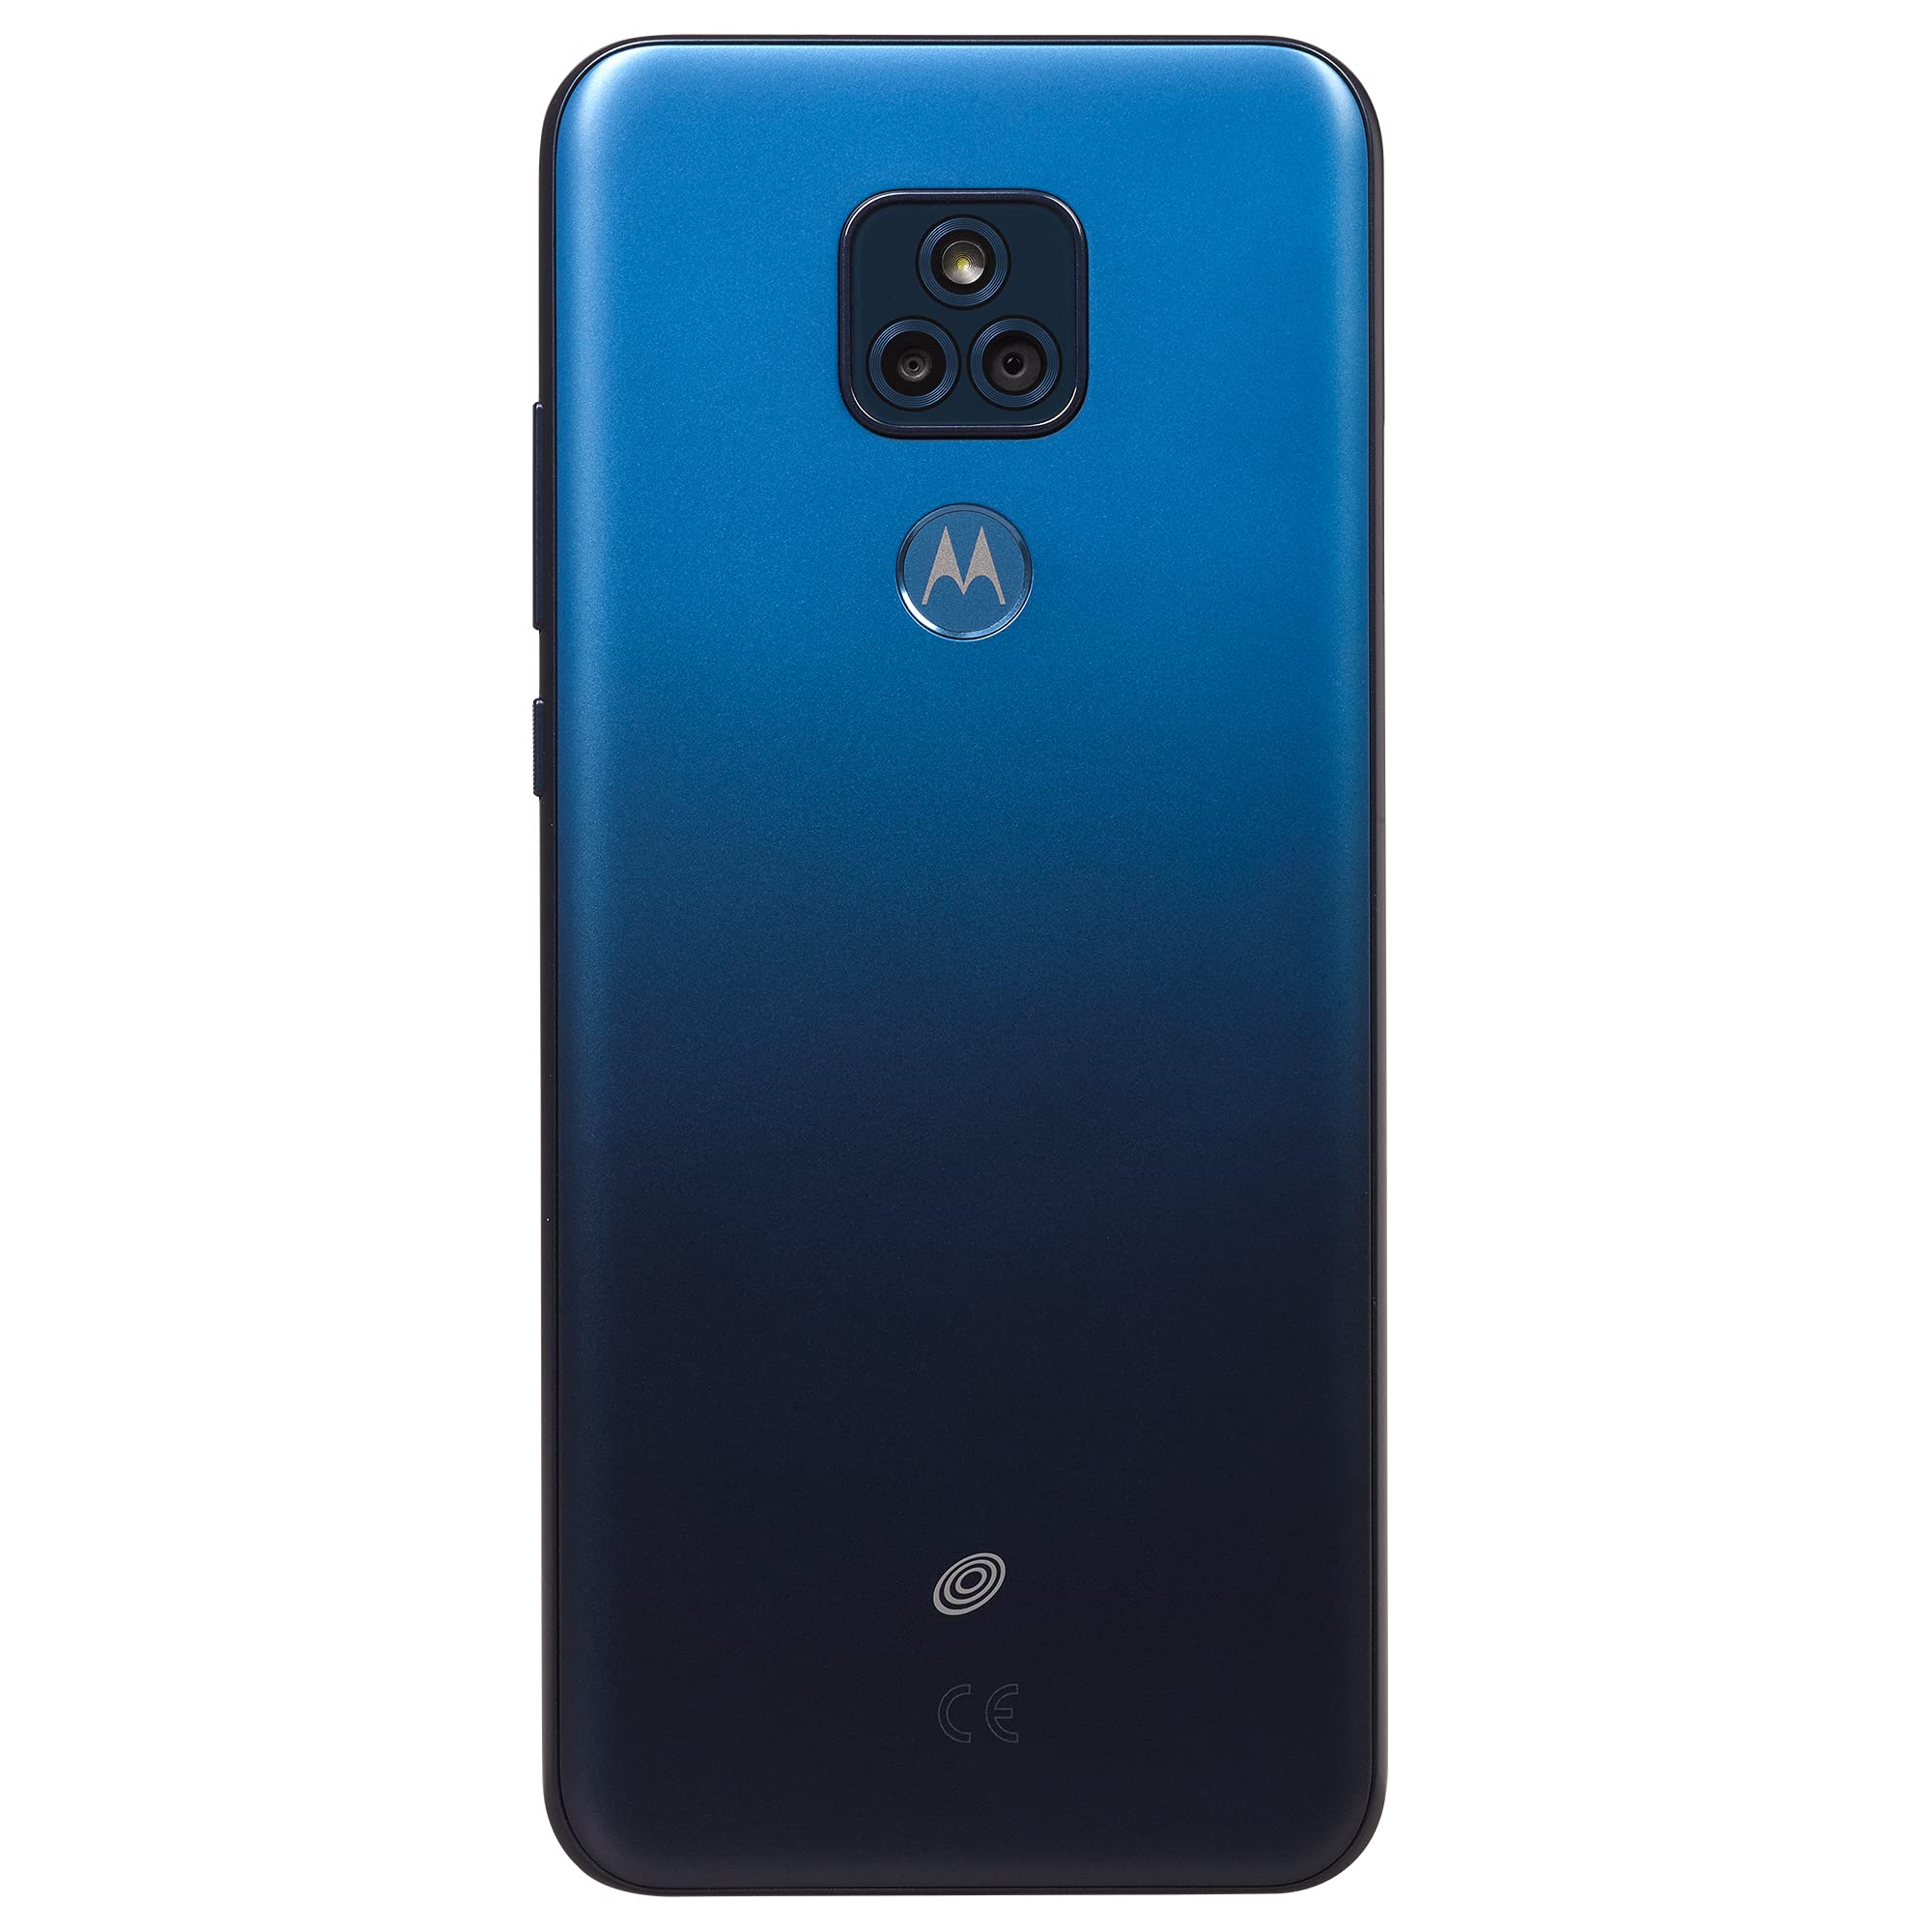 total wireless Motorola Moto g Play, 32GB, Blue - Prepaid Smartphone (Locked)